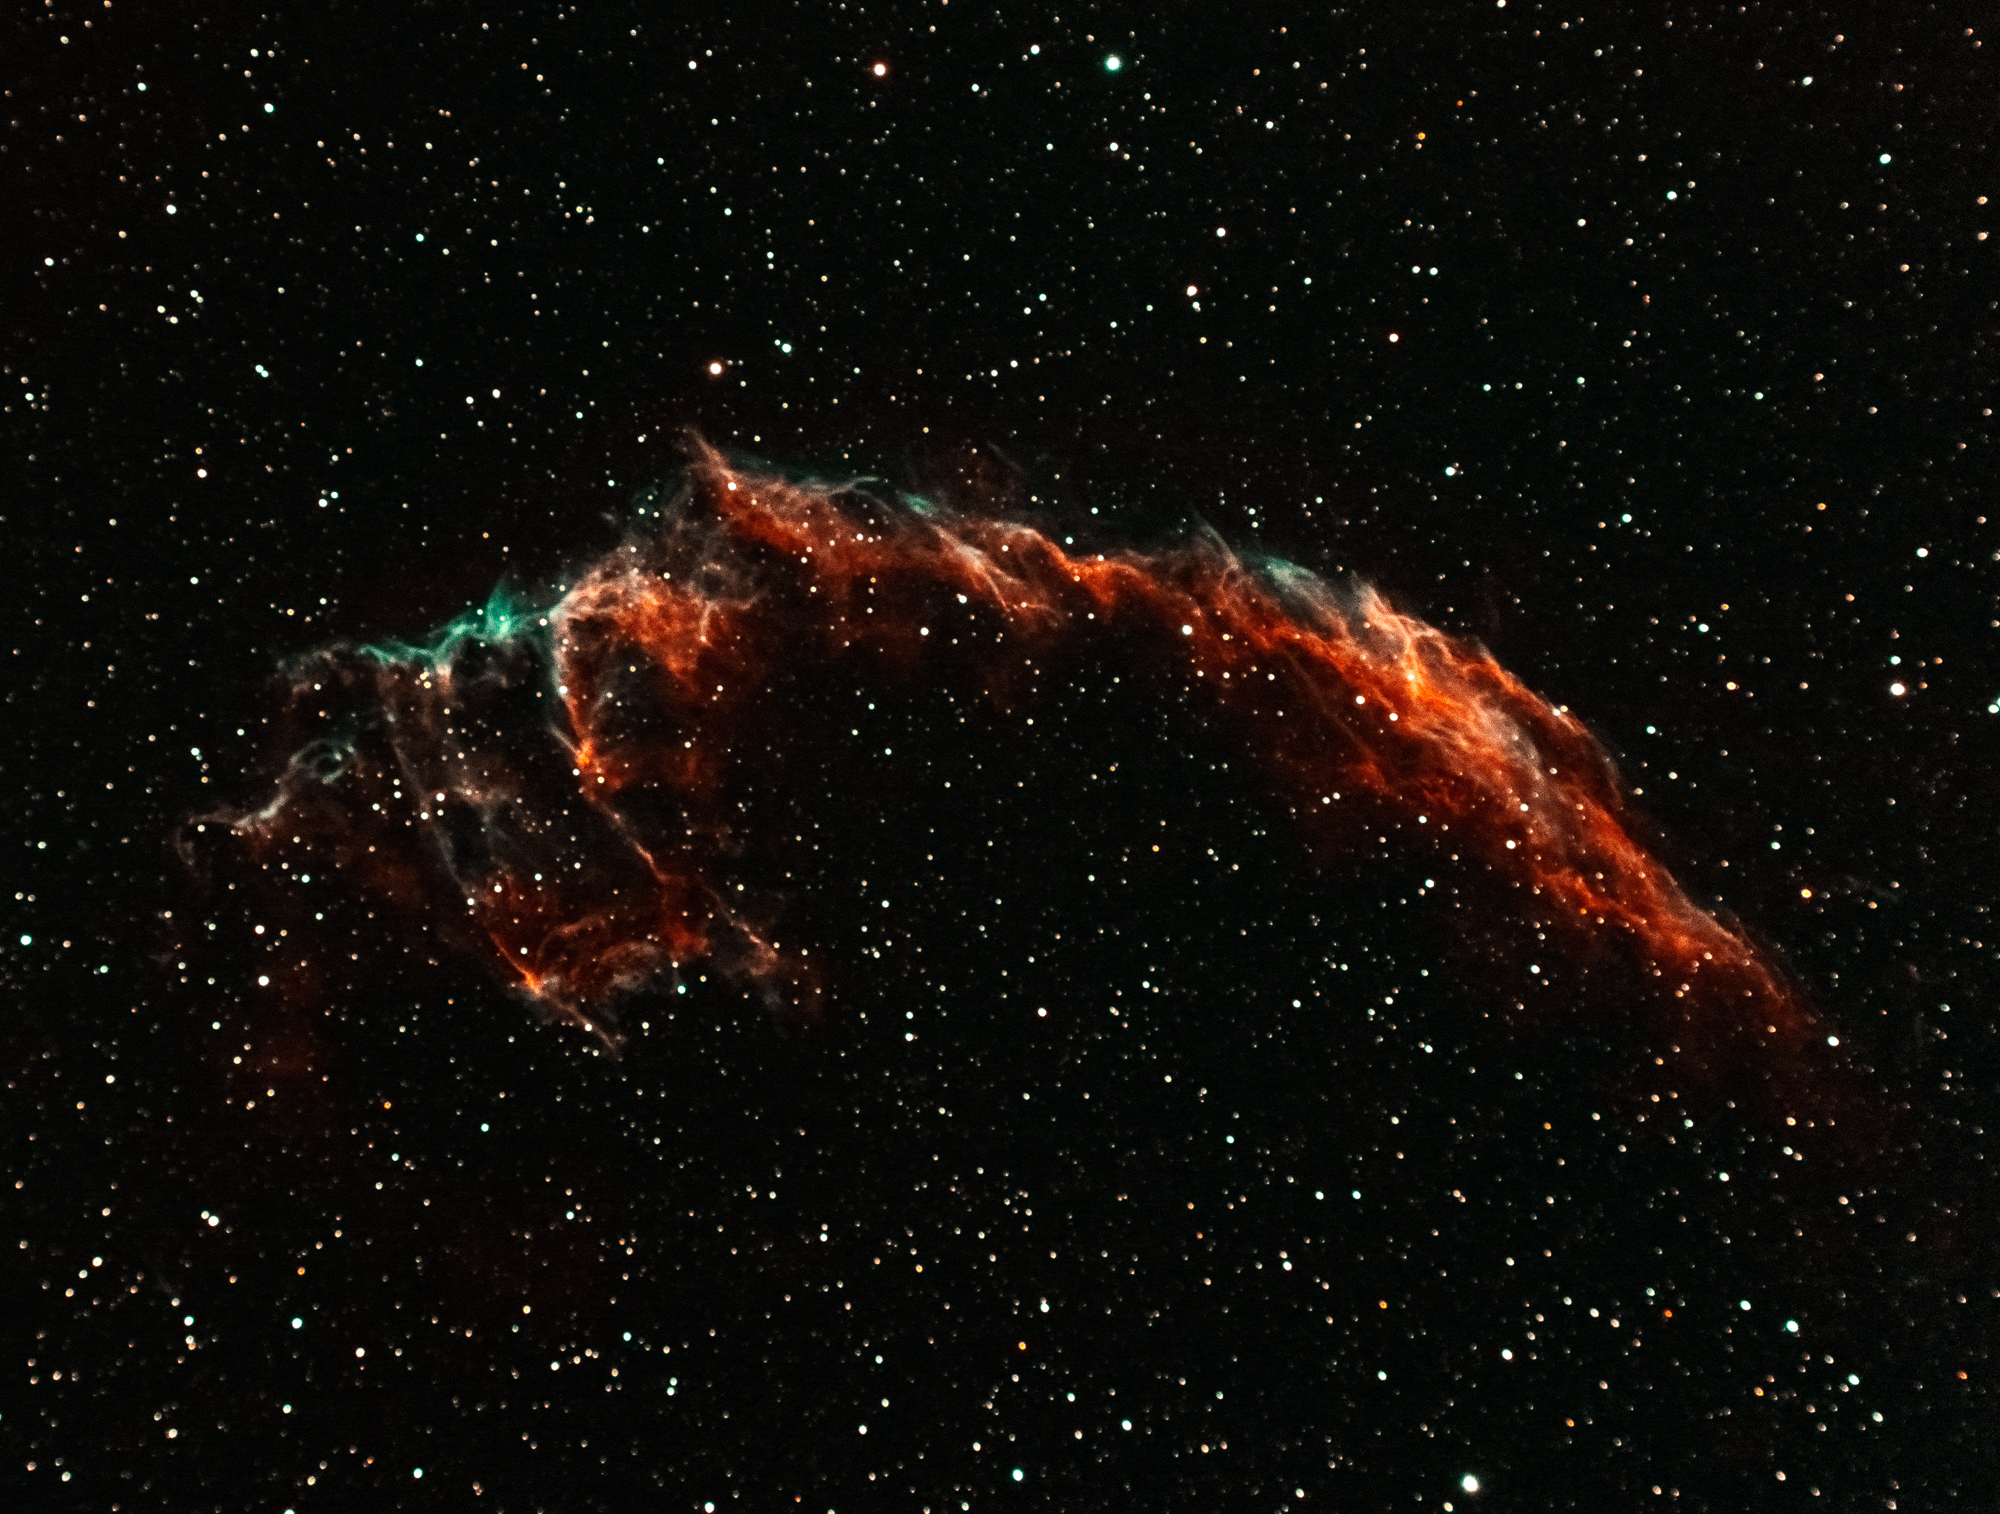 fotoNAT-UB 2020 - SELECCIONADA DE NATURA: Nebulosa del Vel (Pepe Bosch)